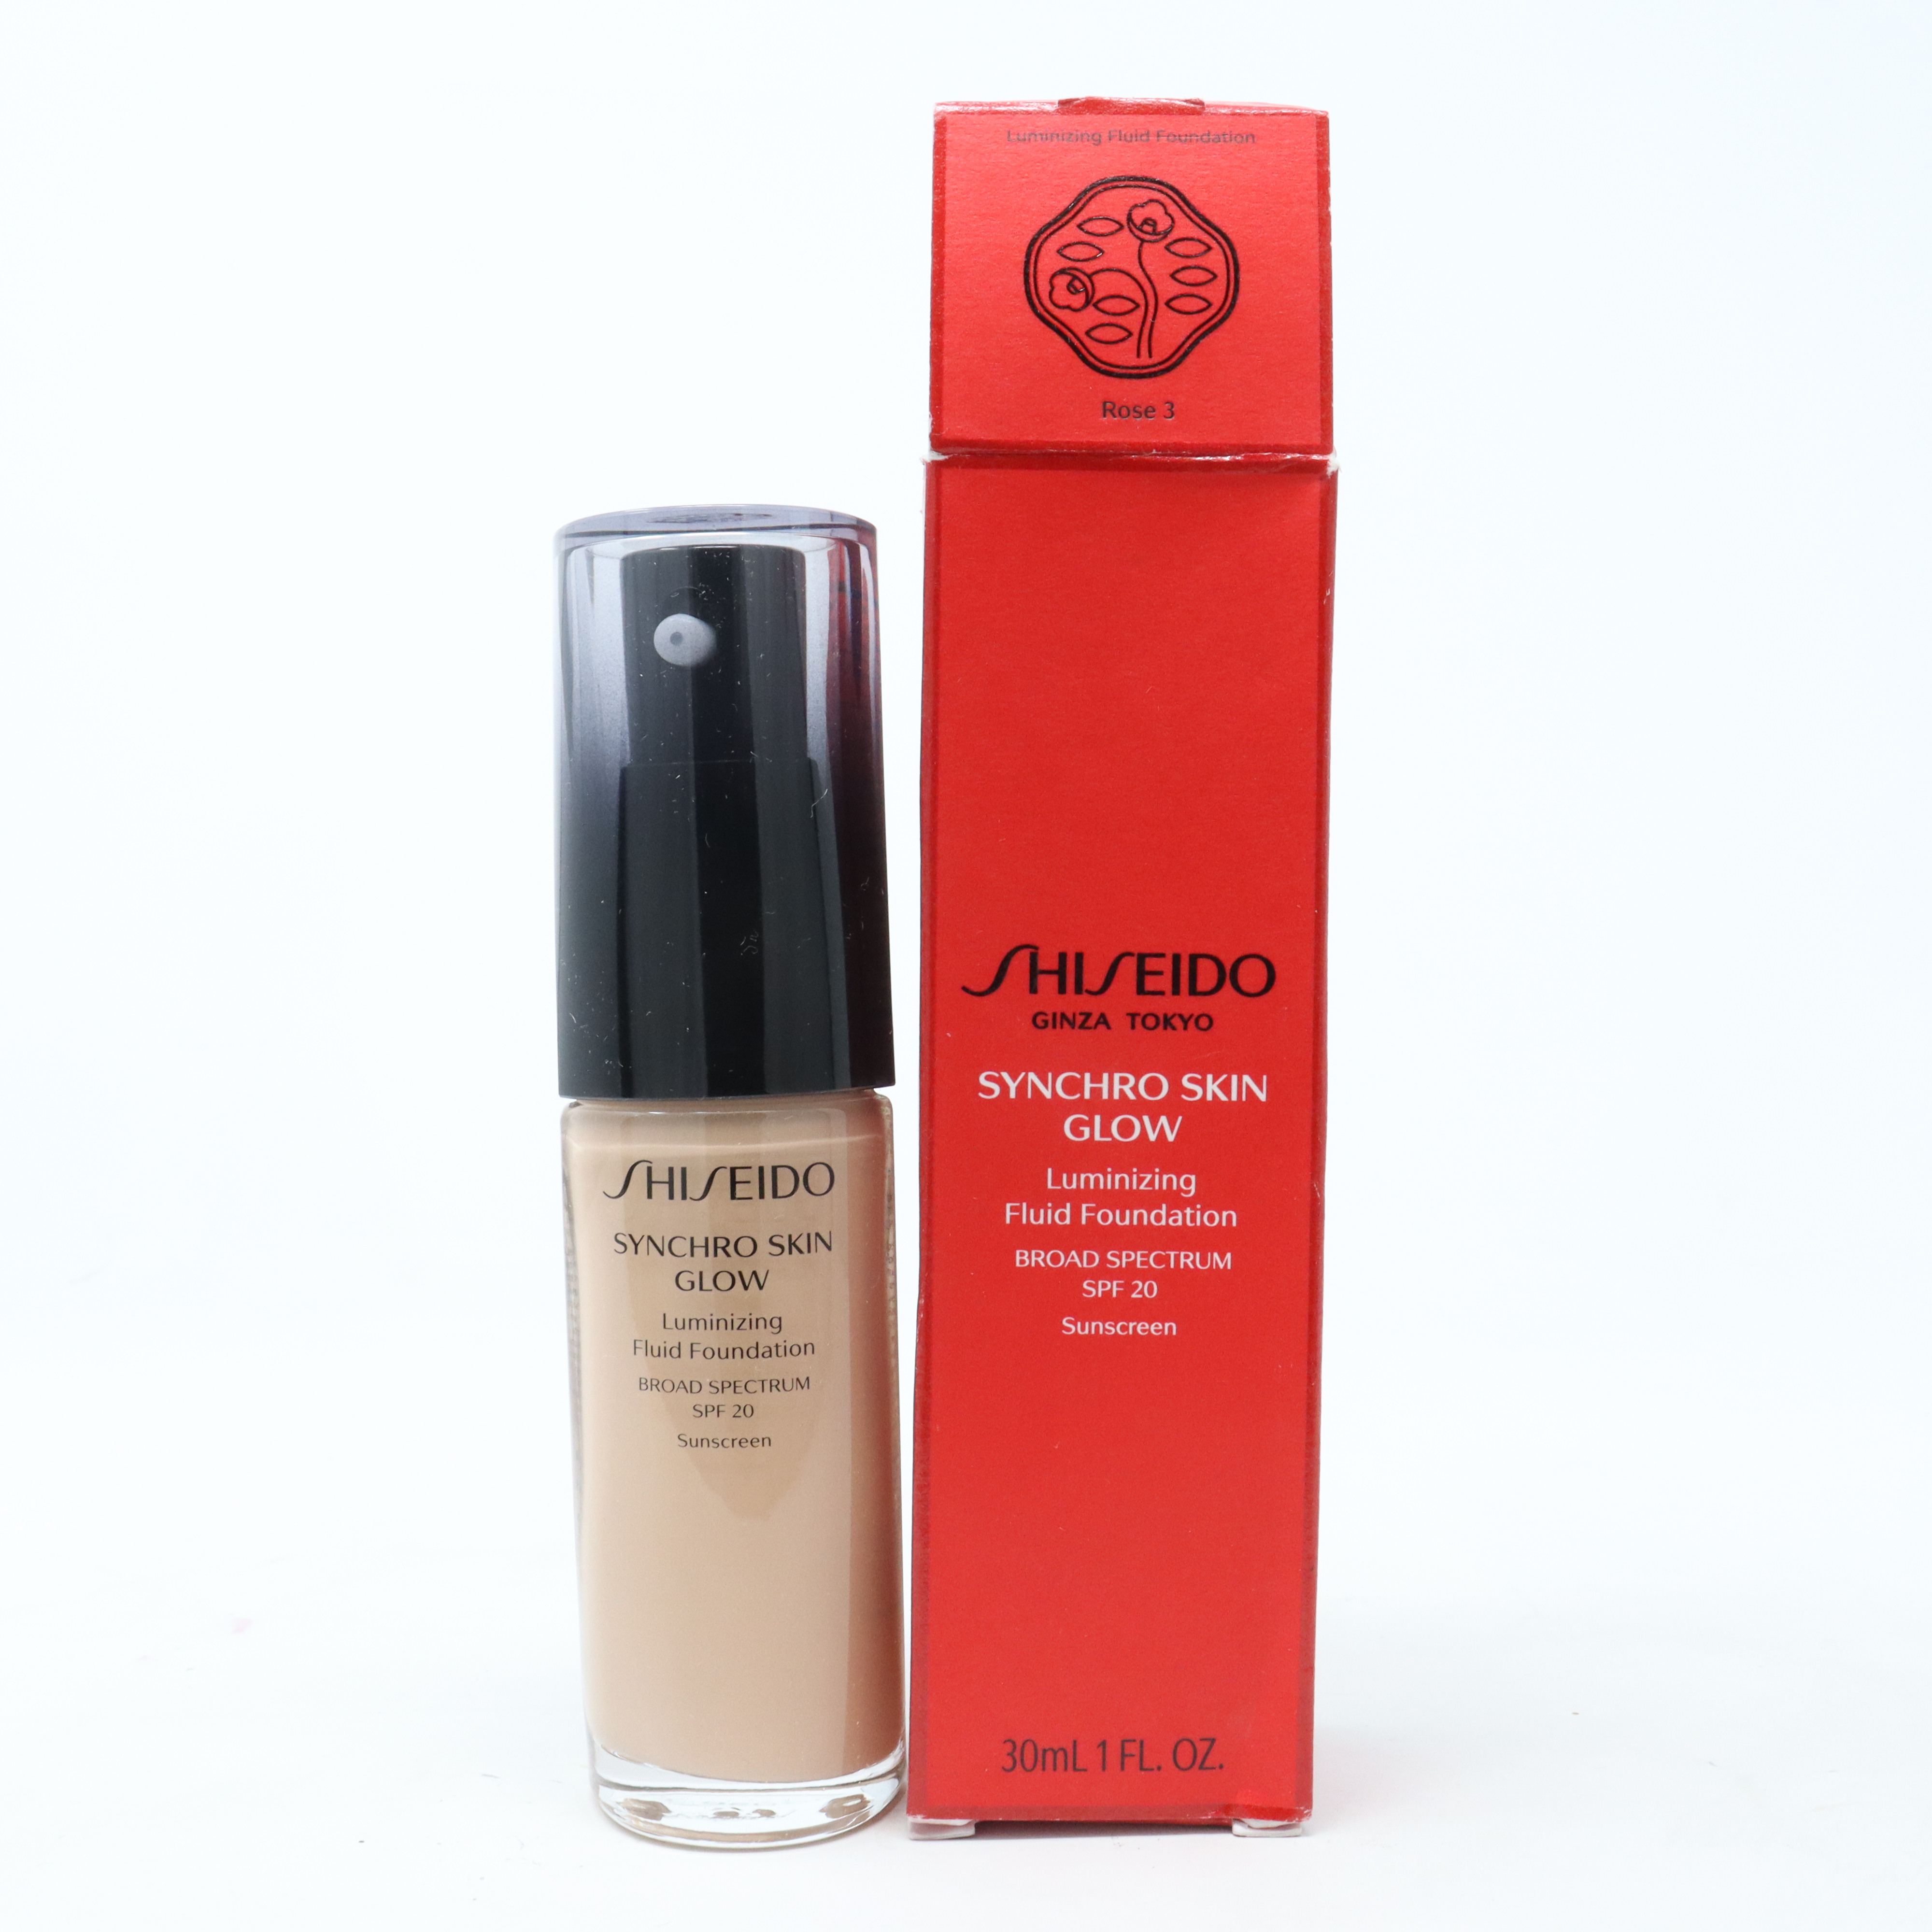 Shiseido Synchro Skin Glow Luminizing SPF 20 Rose 2. Японский для лица Shiseido сияющая база перламутровый. Shiseido Shizuka Red 223 отзывы. Шисейдо ревиталесенс скин Глоу отзывы. Shiseido флюид